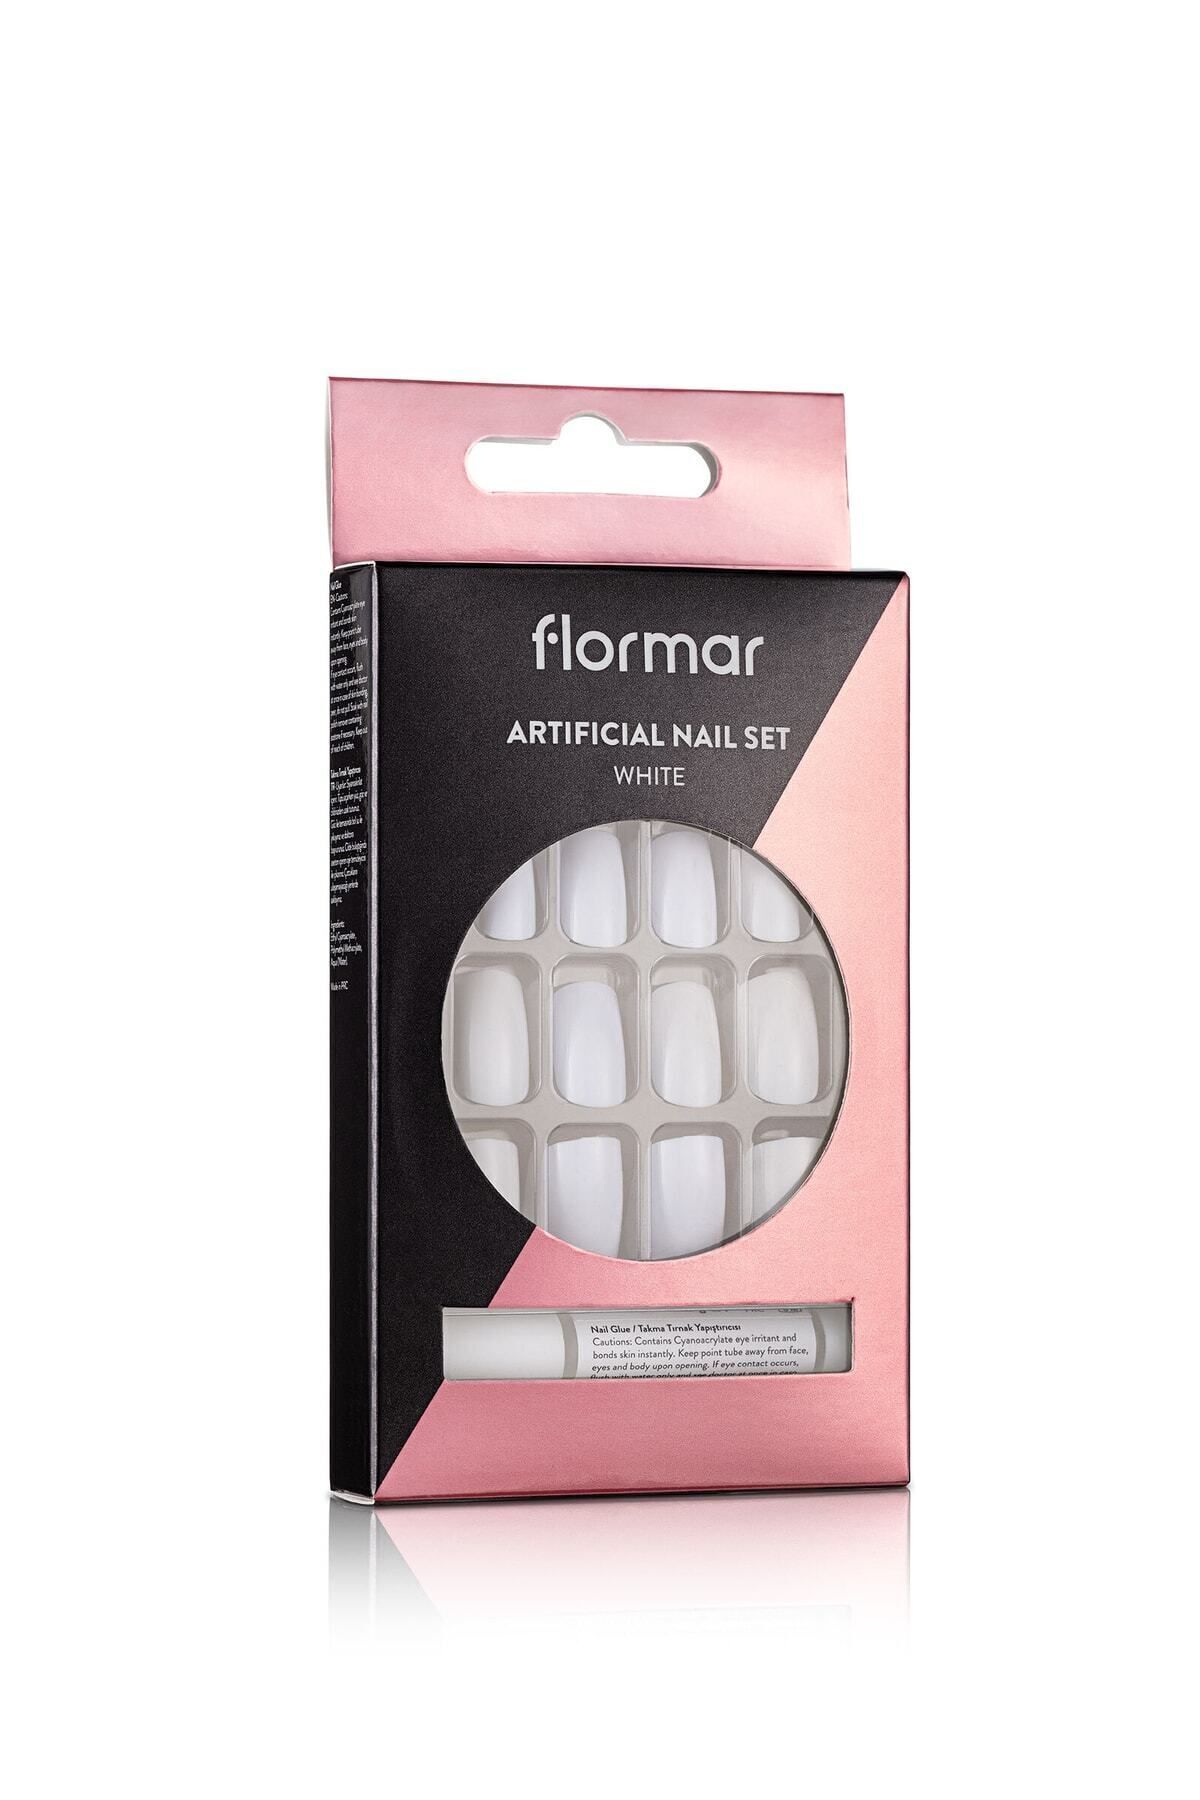 Flormar Klasik Takma Tırnak Seti - Artificial Nail Set - 052 - 8690604598625 49000096-052